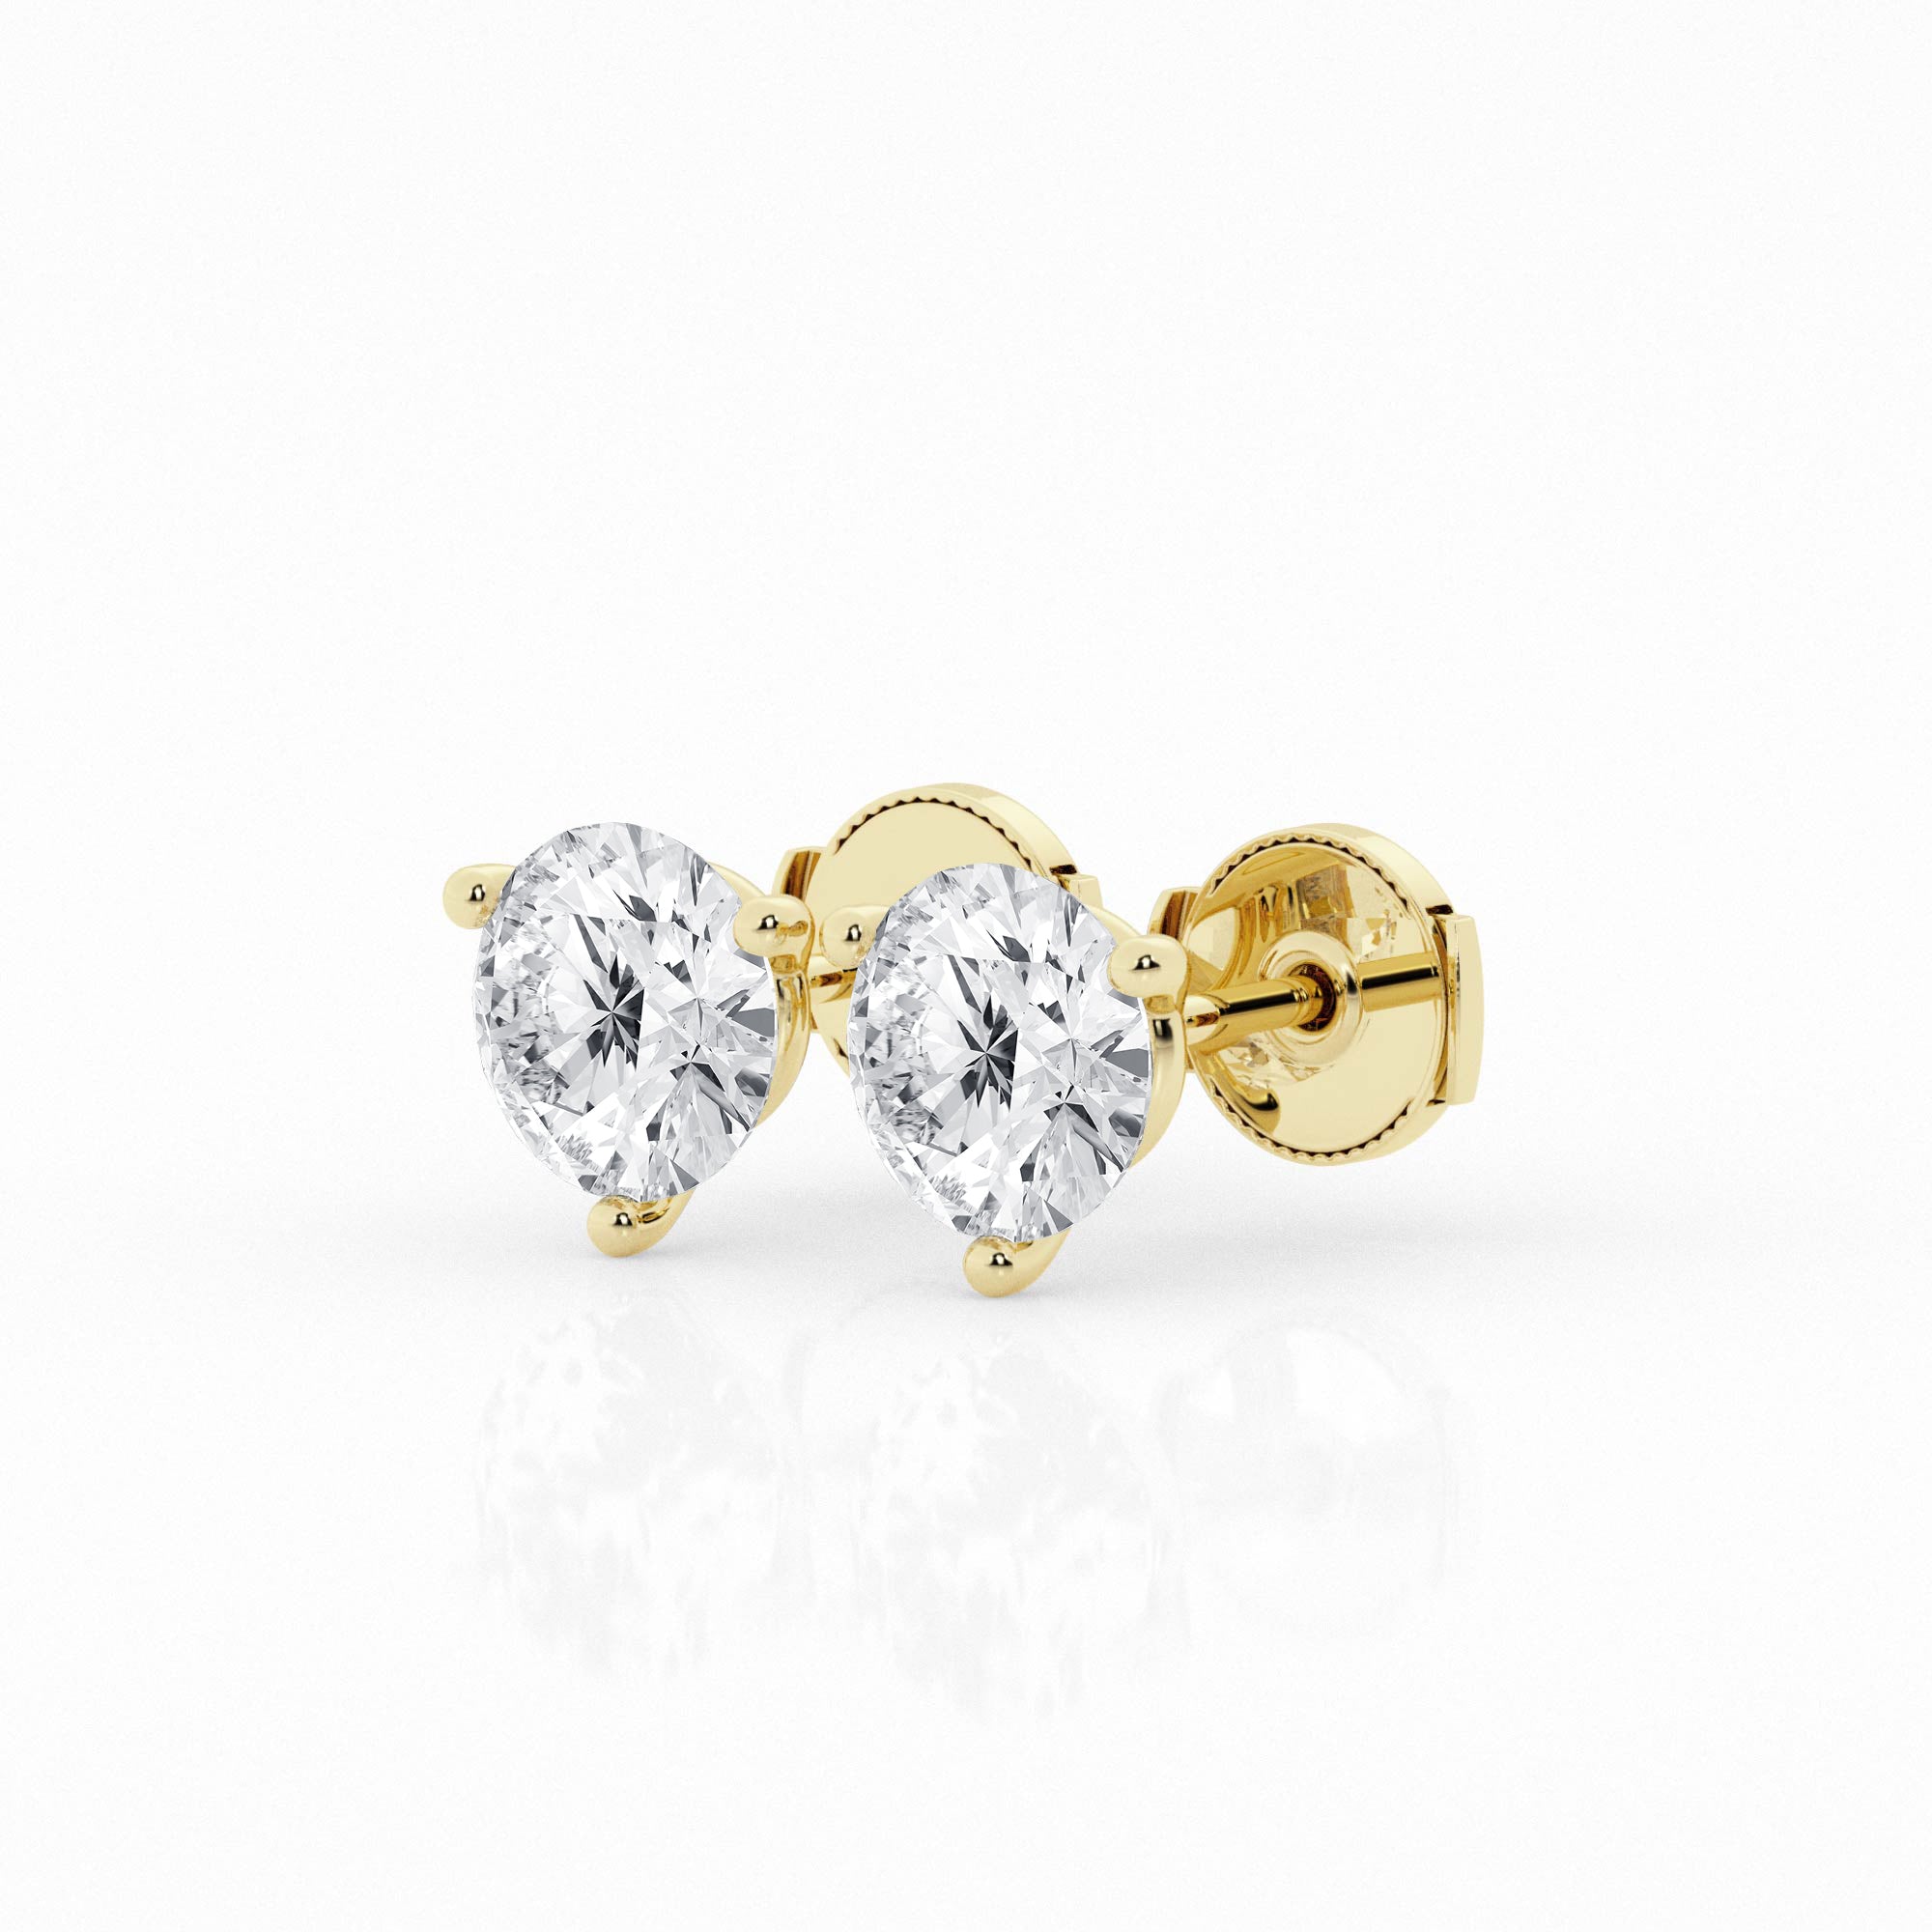 5 carat Round Diamond Earring Studs